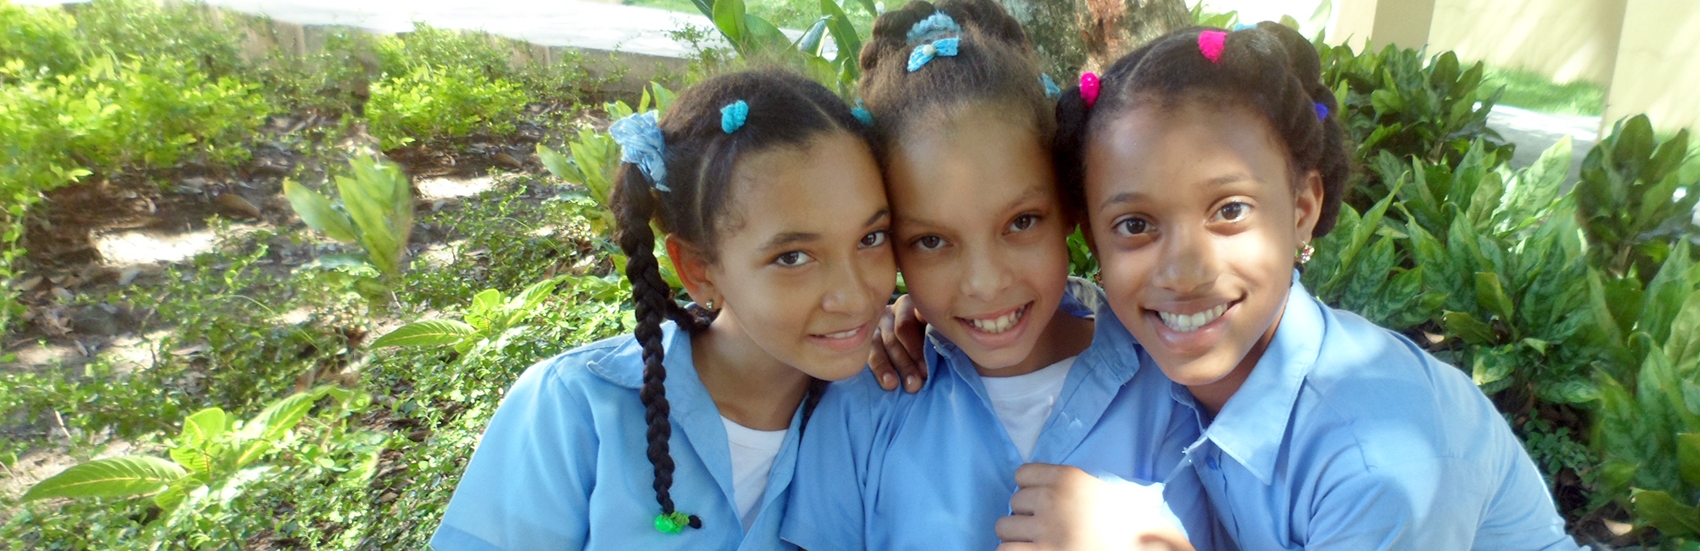 Three school-aged girls attend a Save the Children program at a school in Dajabon, Dominican Republic. Photo credit: Aneliya Nikolova/Save the Children, July 2016.